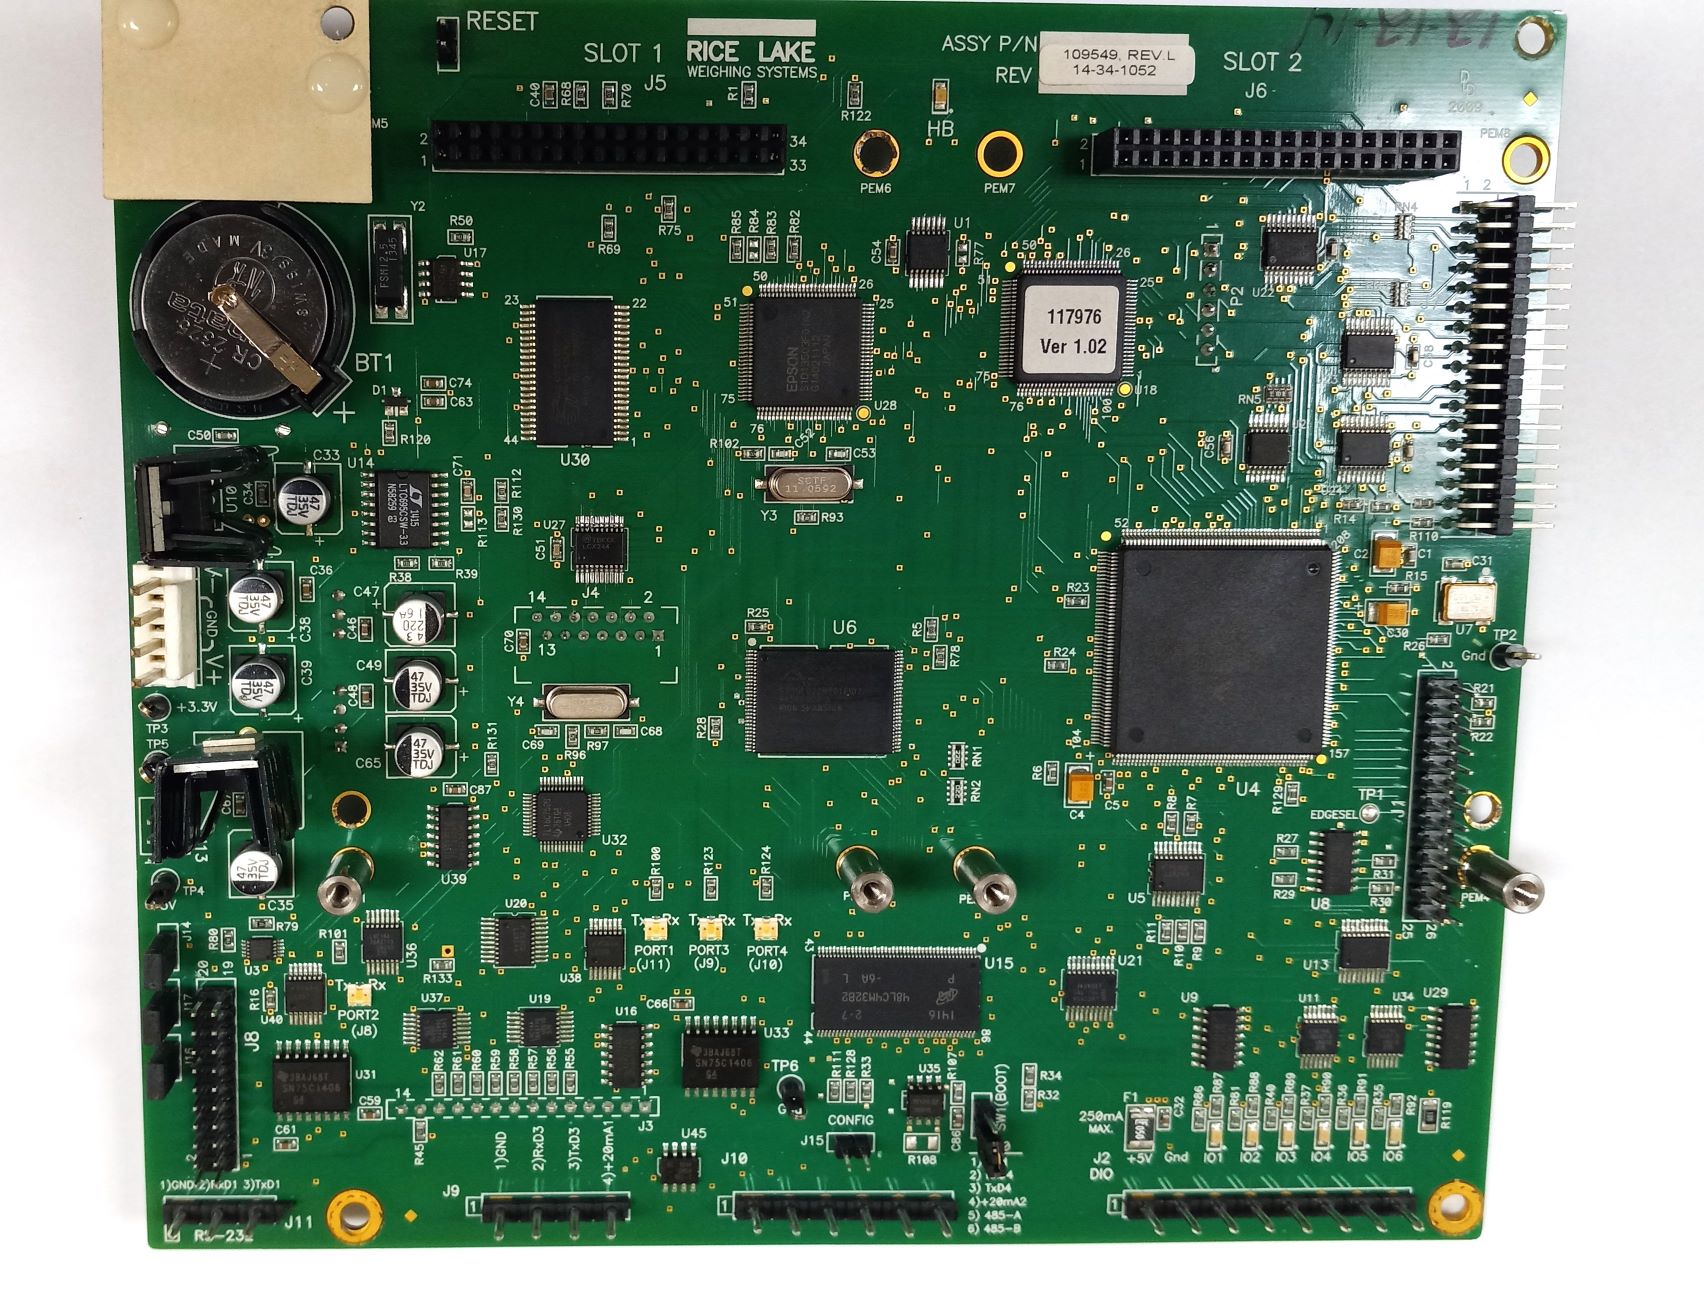 Rice Lake 920i CPU board